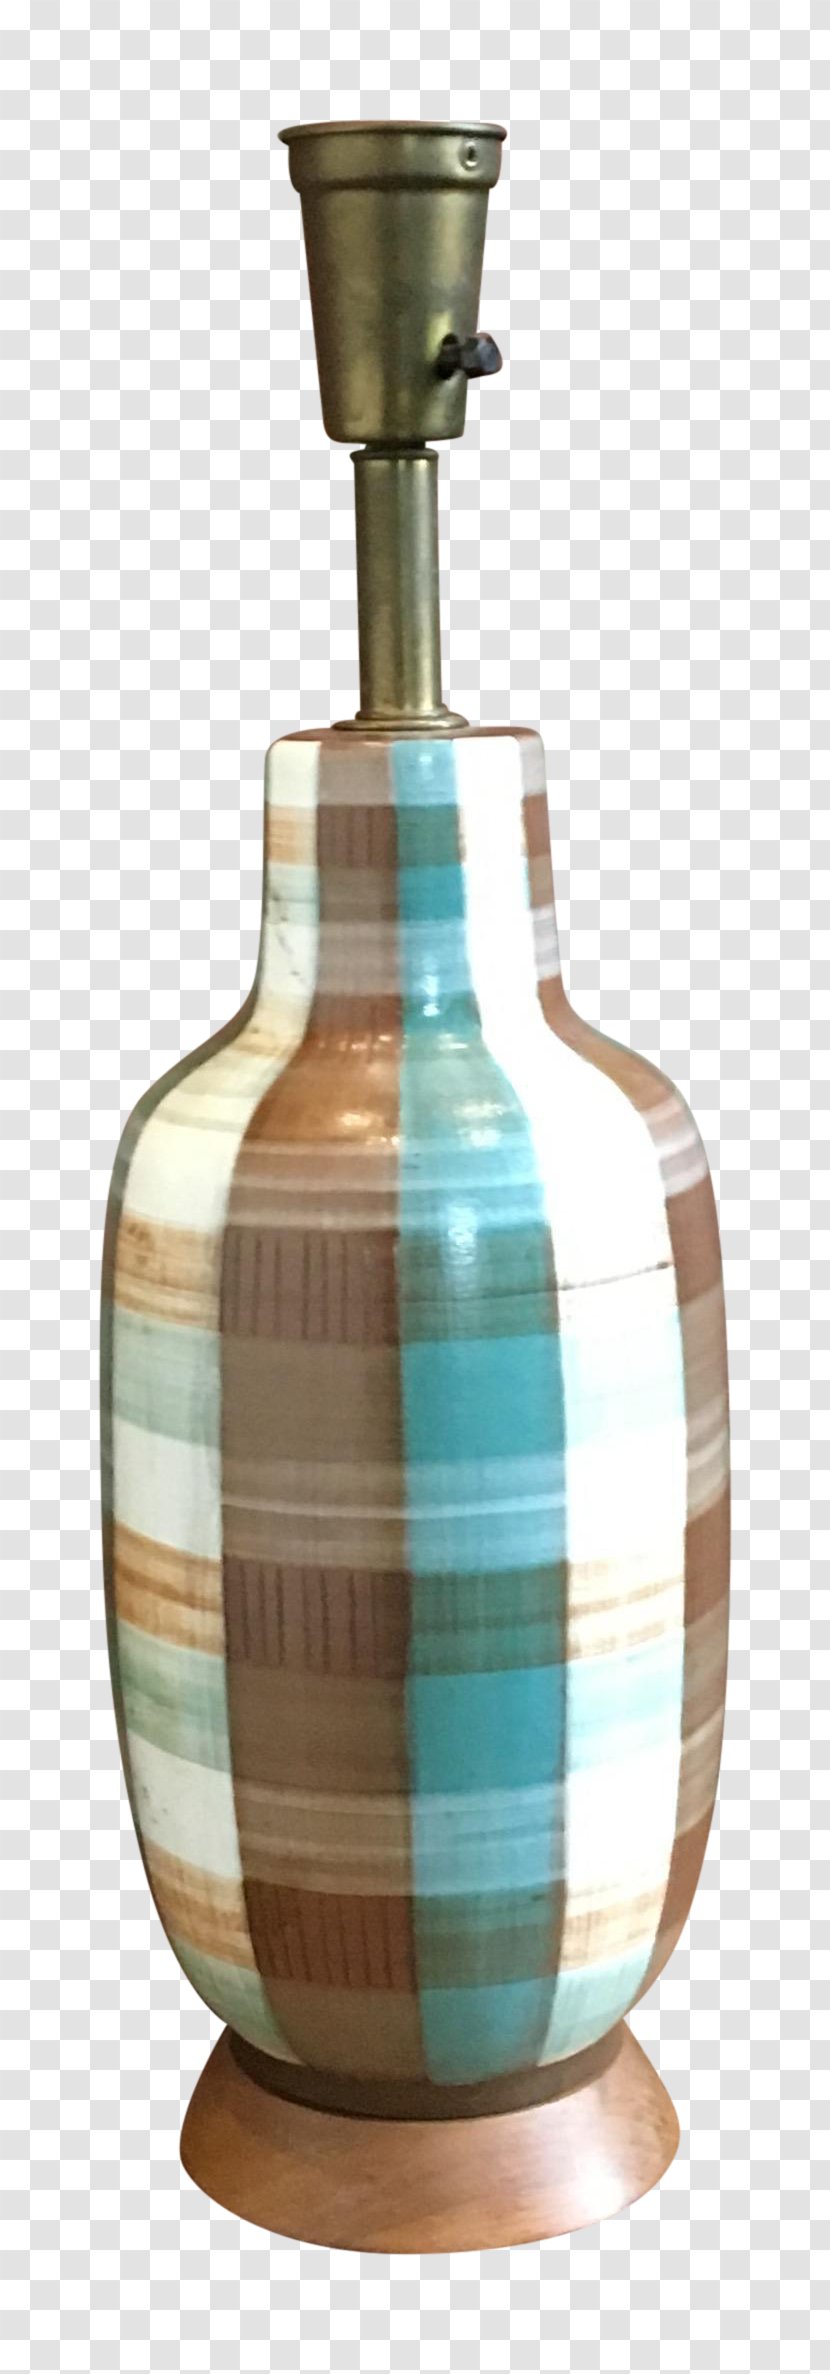 Ceramic Vase Pottery Glass Bottle - Hand-painted Lamp Transparent PNG